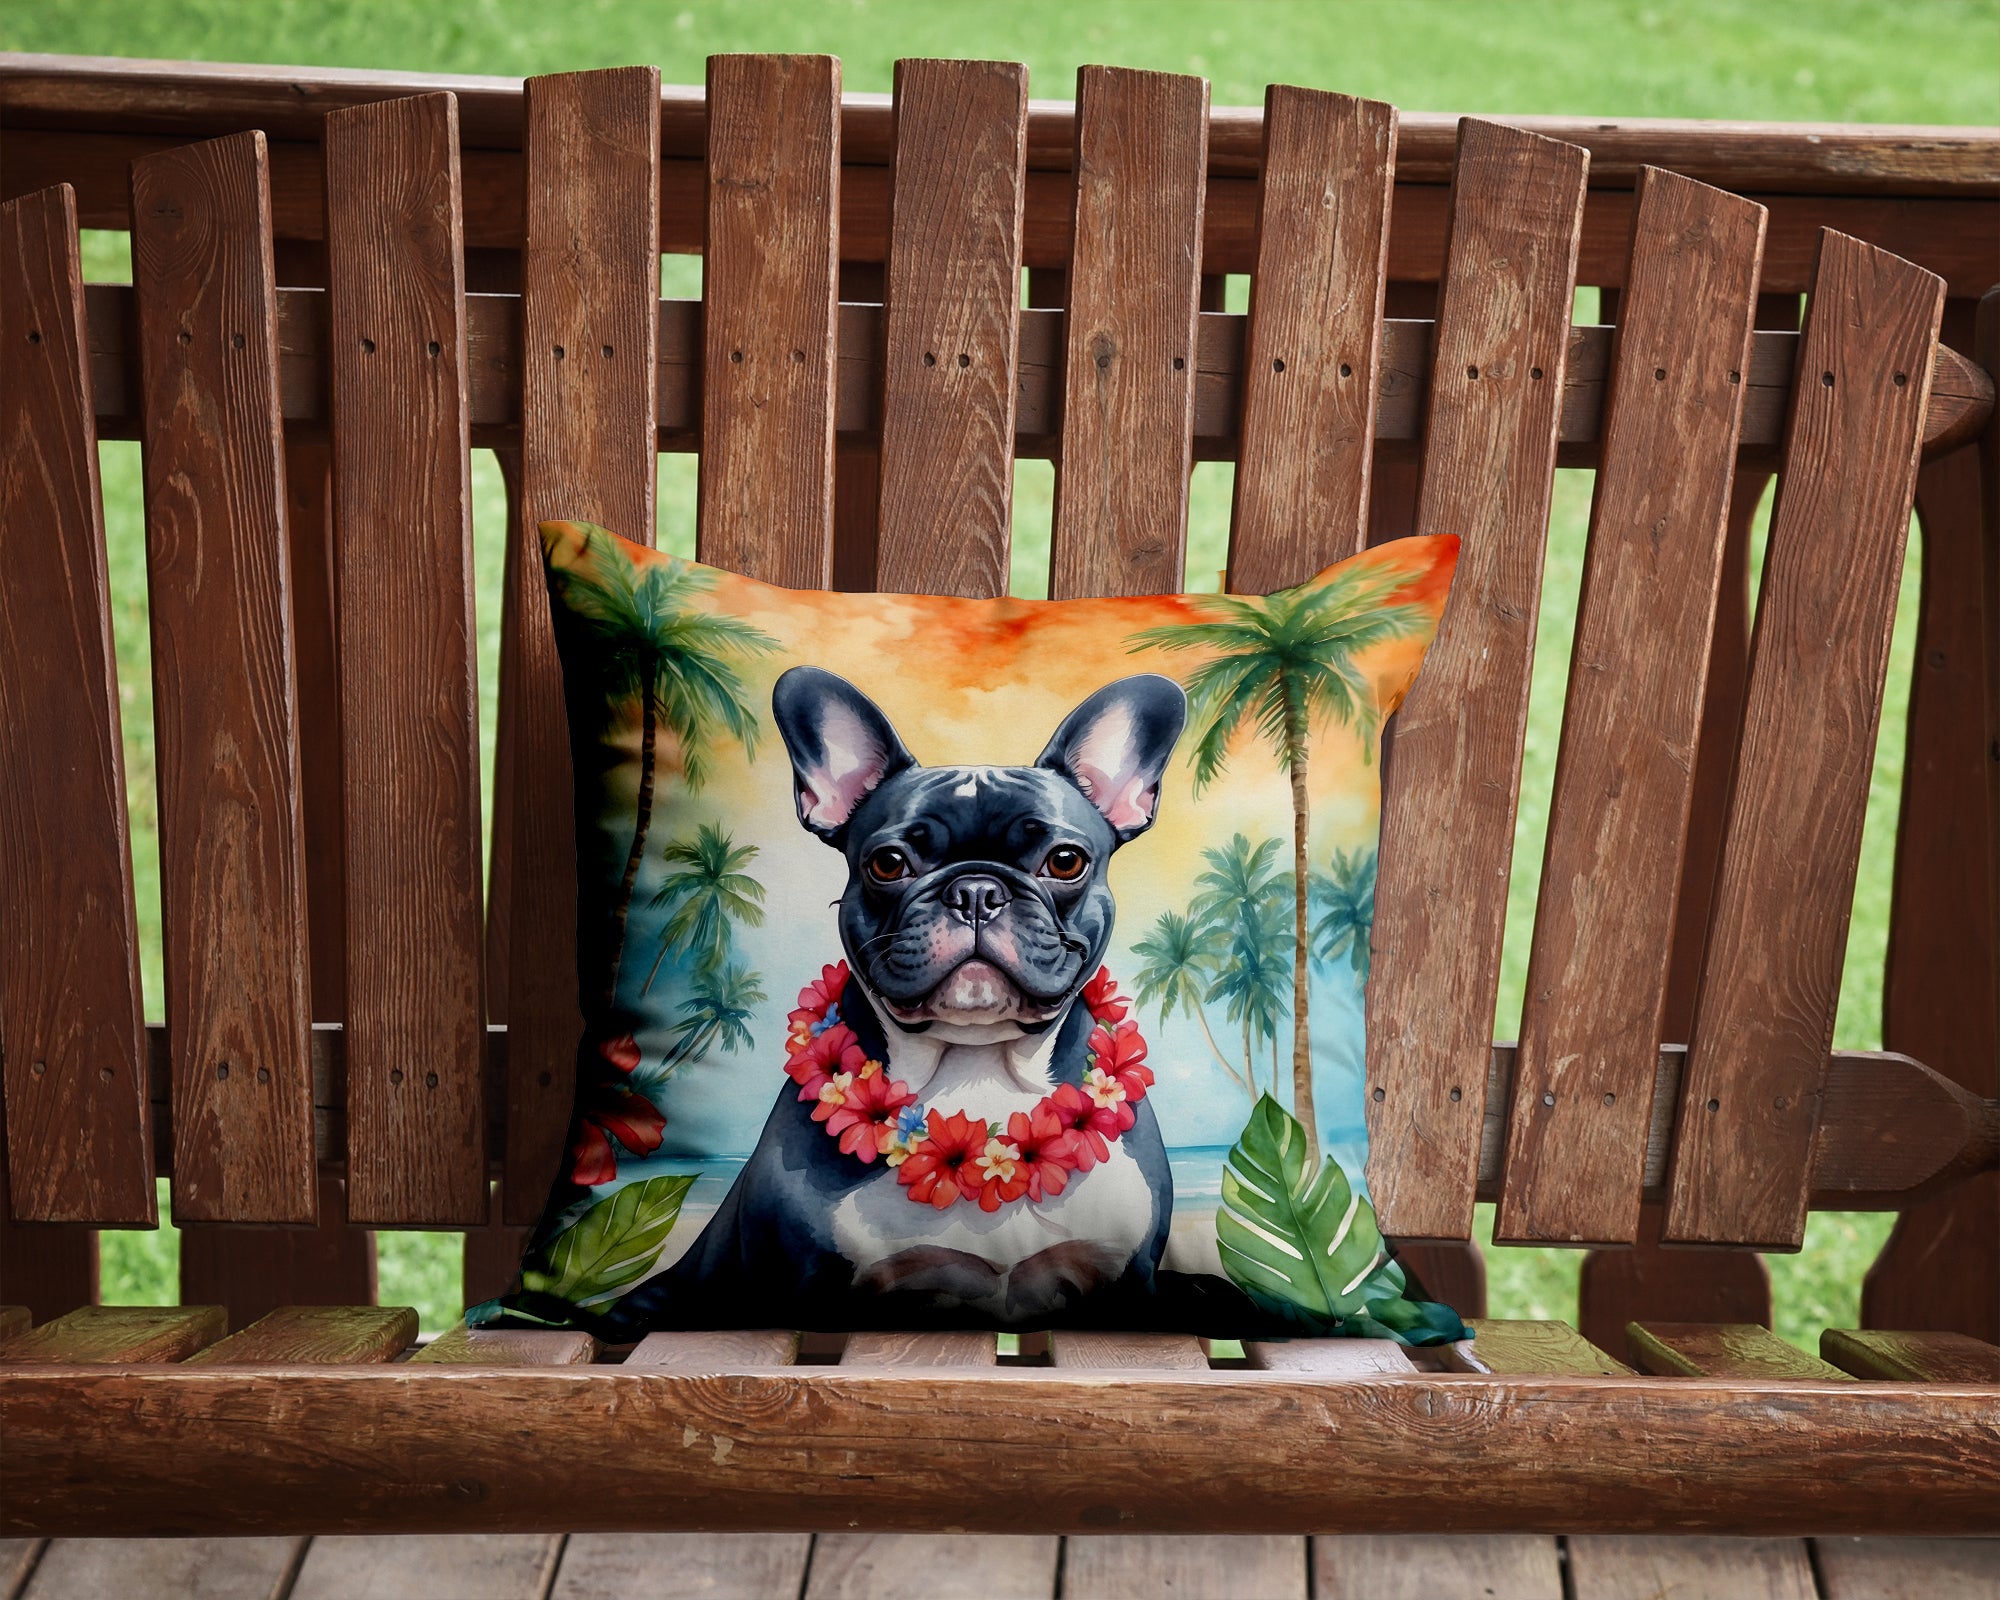 Buy this French Bulldog Luau Throw Pillow